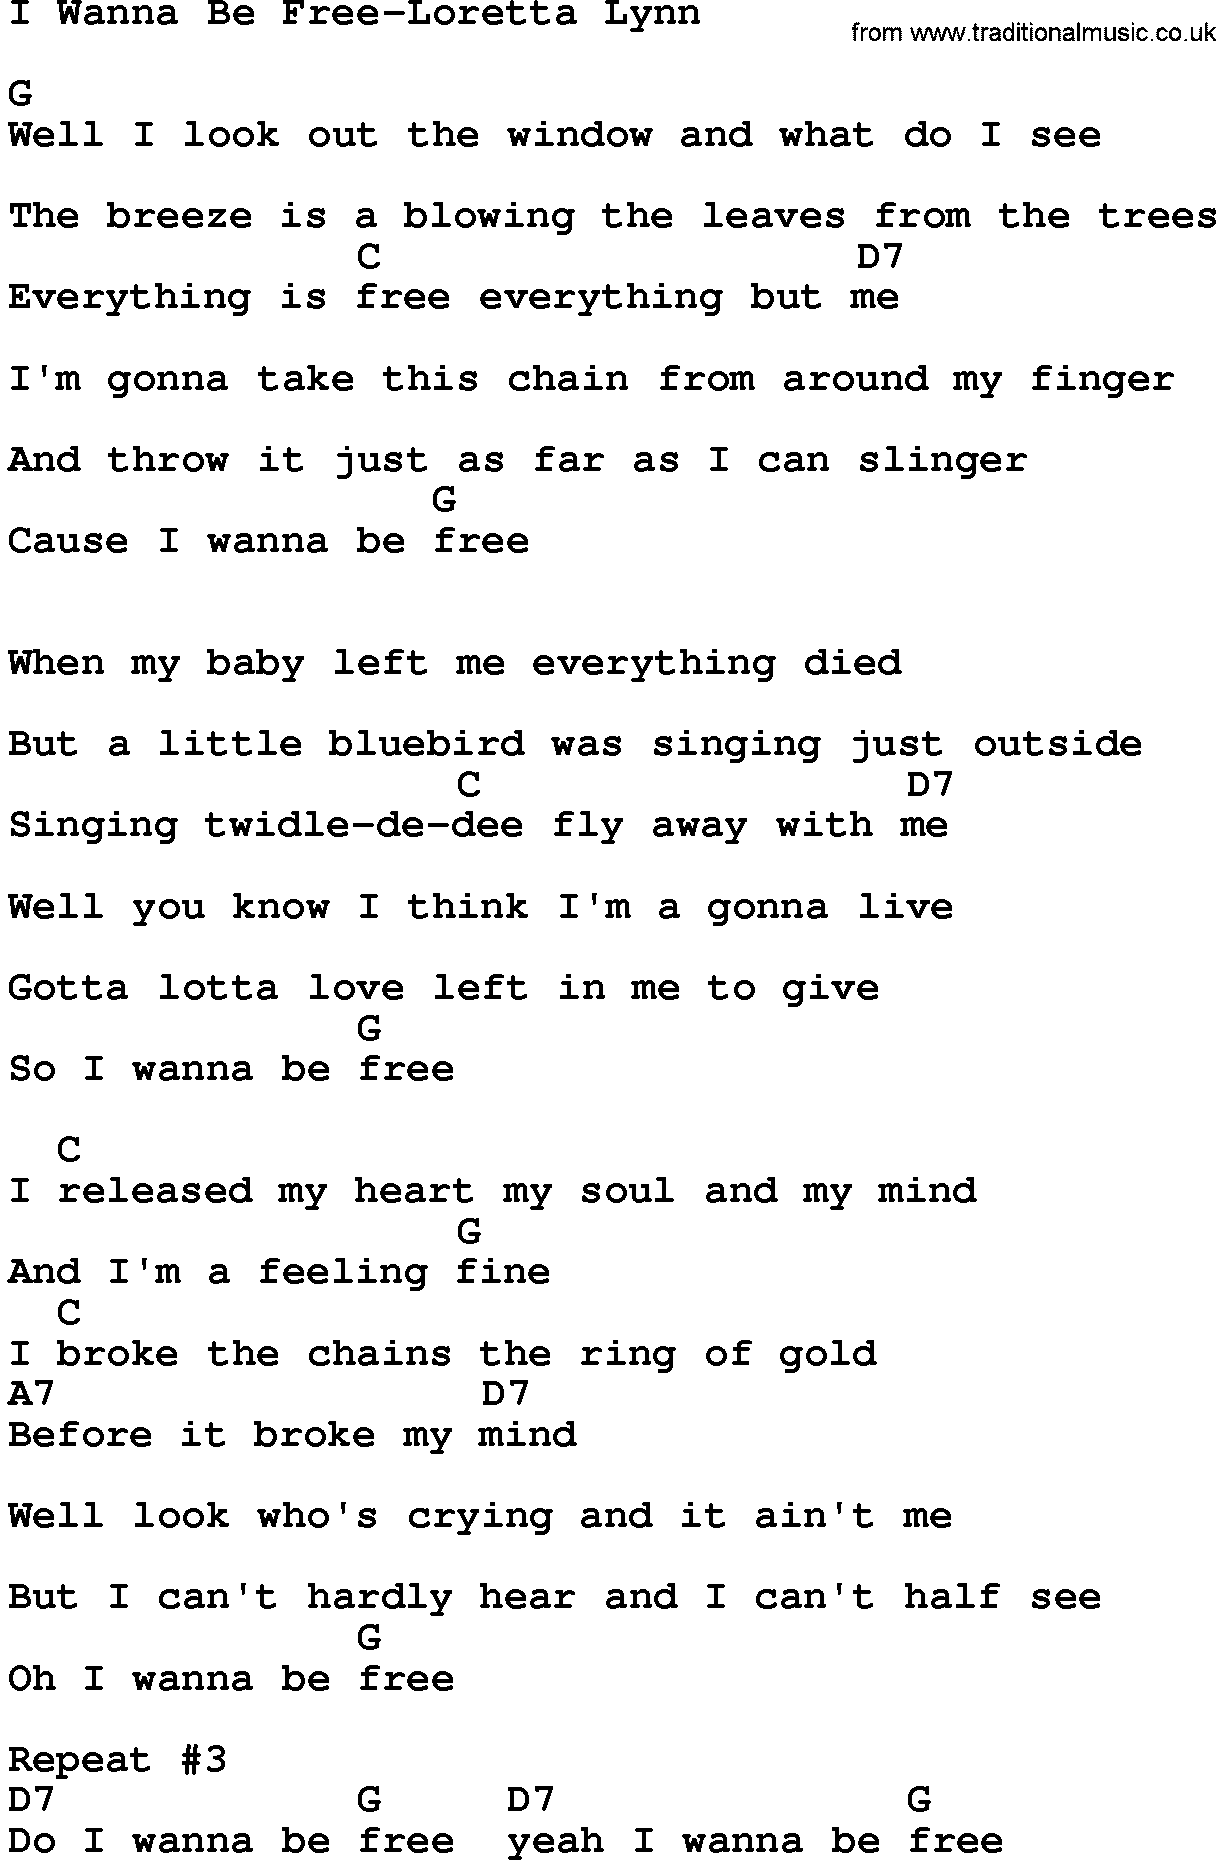 Country music song: I Wanna Be Free-Loretta Lynn lyrics and chords